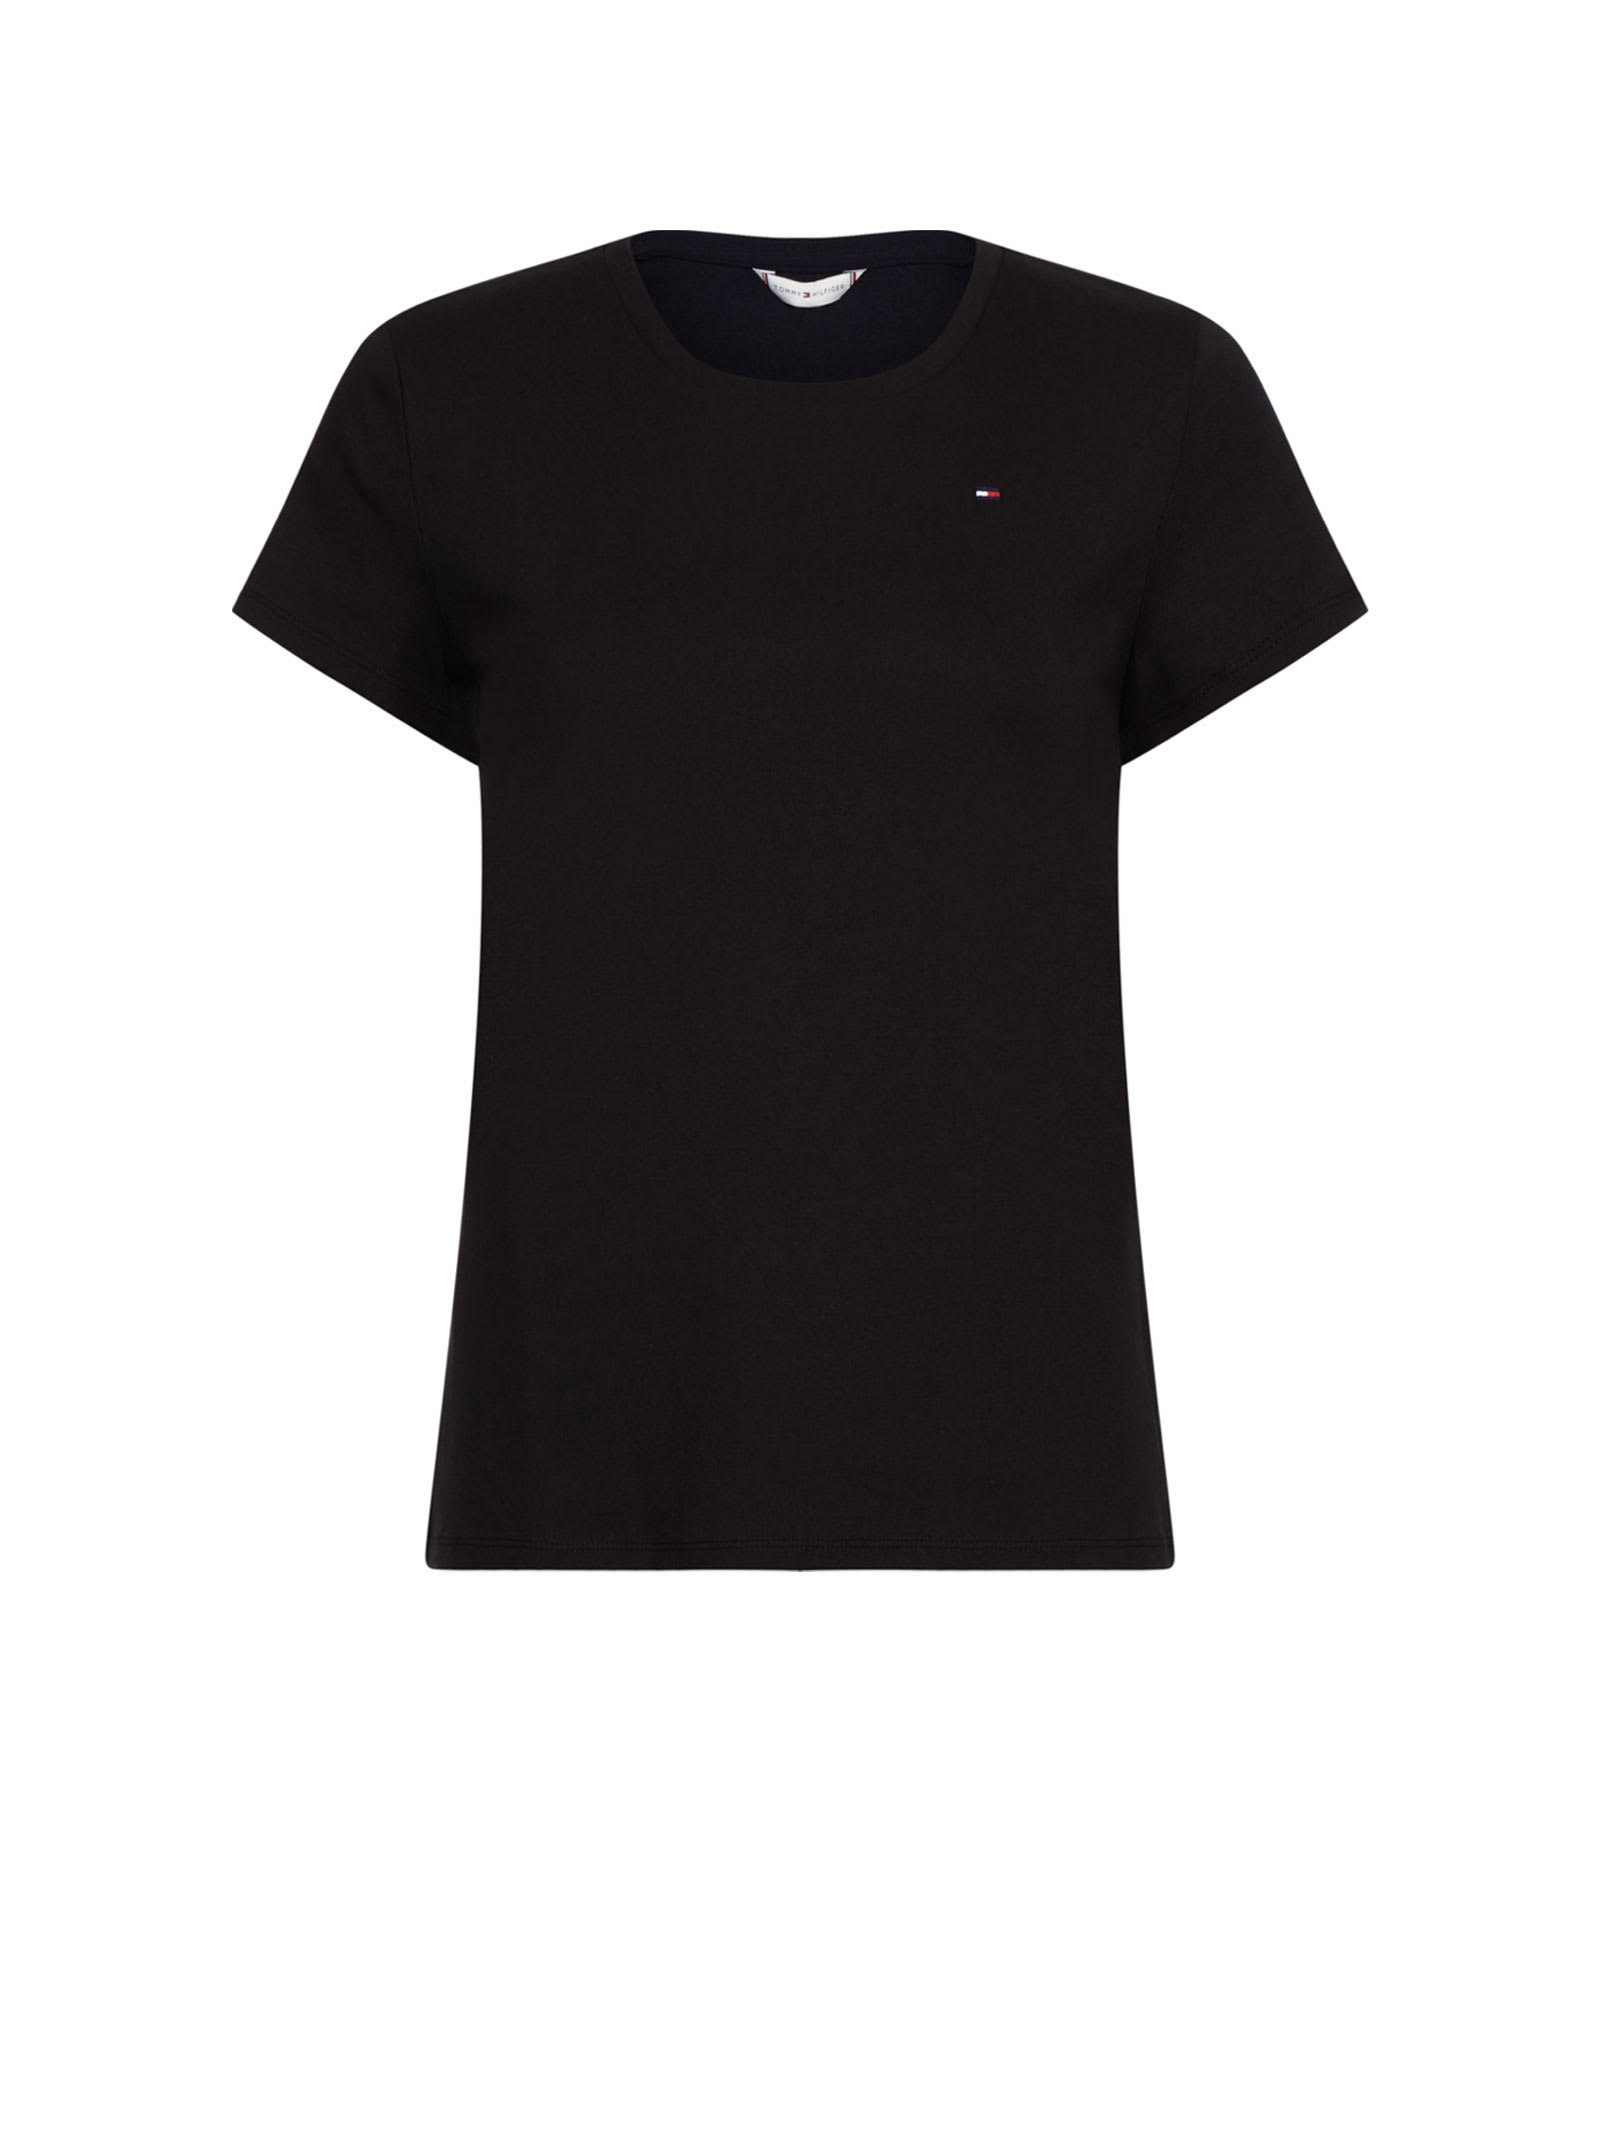 Tommy Hilfiger Black Cotton T-shirt